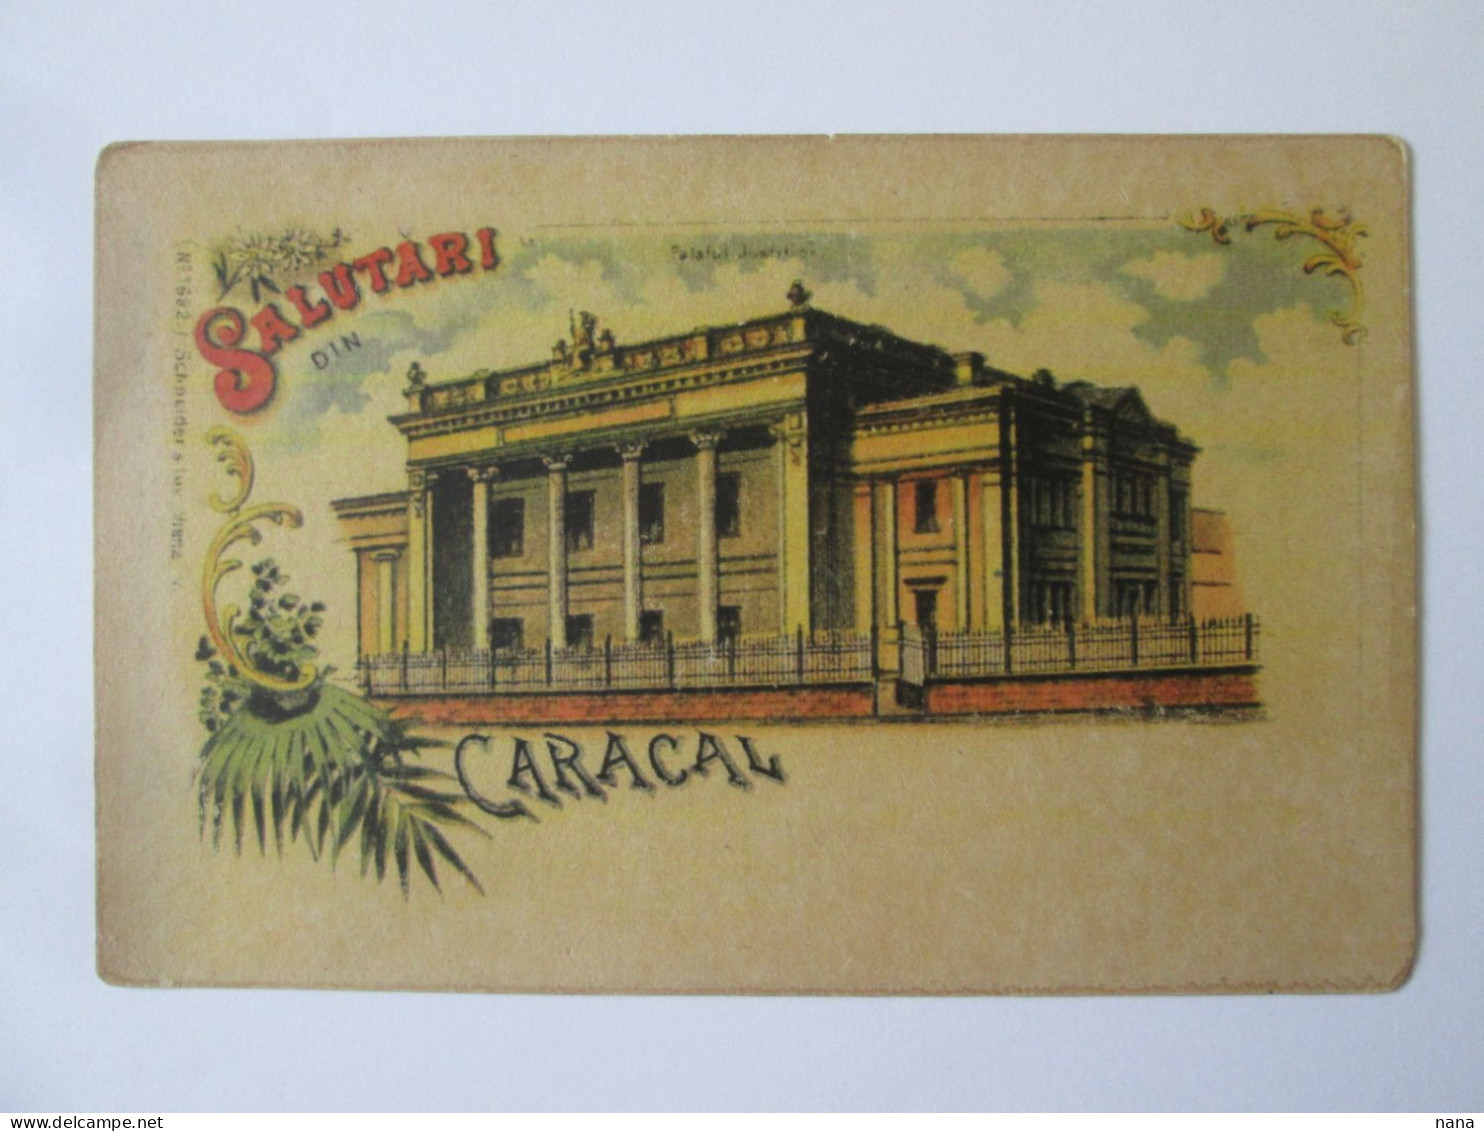 Copie De Carte Postale Roumanie:Salutations Du Caracal/Copy Of Romanian Postcard:Greetings From The Caracal - Romania